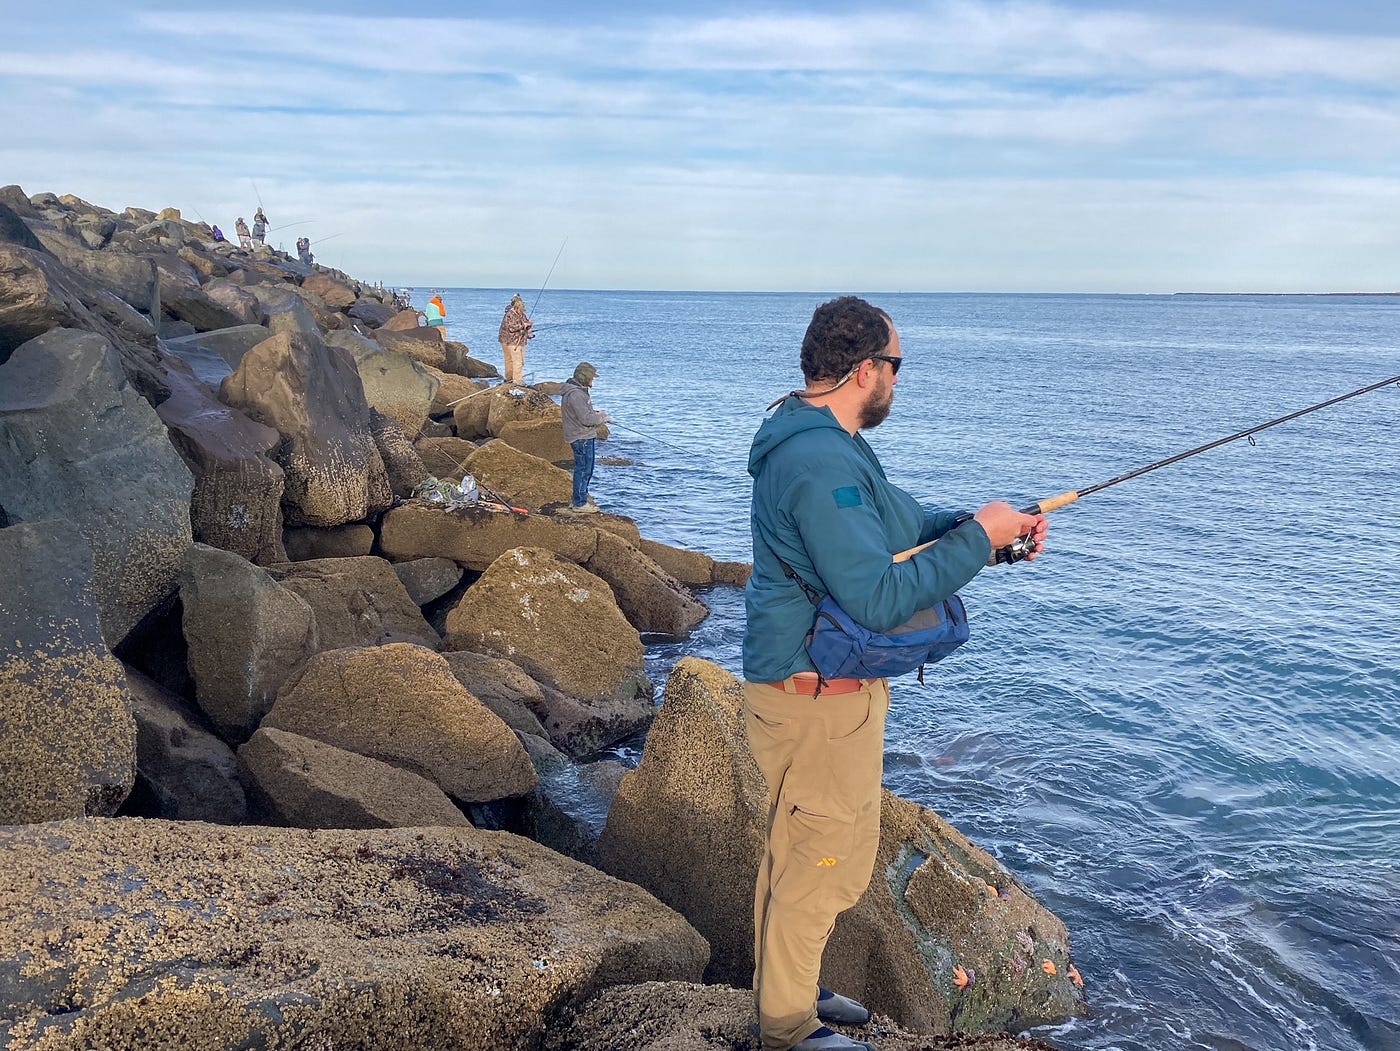 No boat bottomfish: Jetty fishing on the Washington Coast